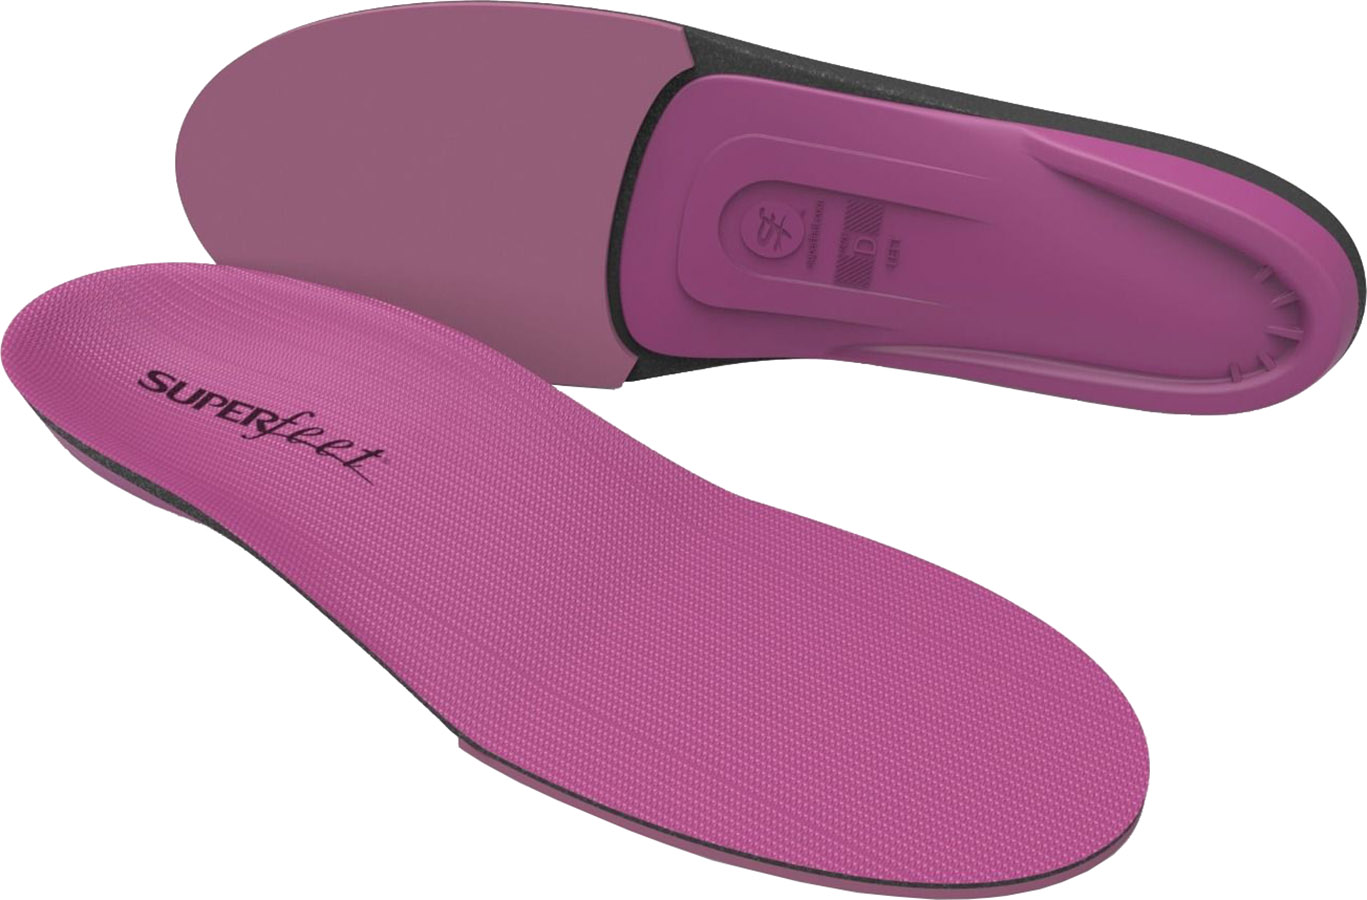 Superfeet All-Purpose Women's High Impact Support (Berry) Women's Walking/Running Shoe Insoles